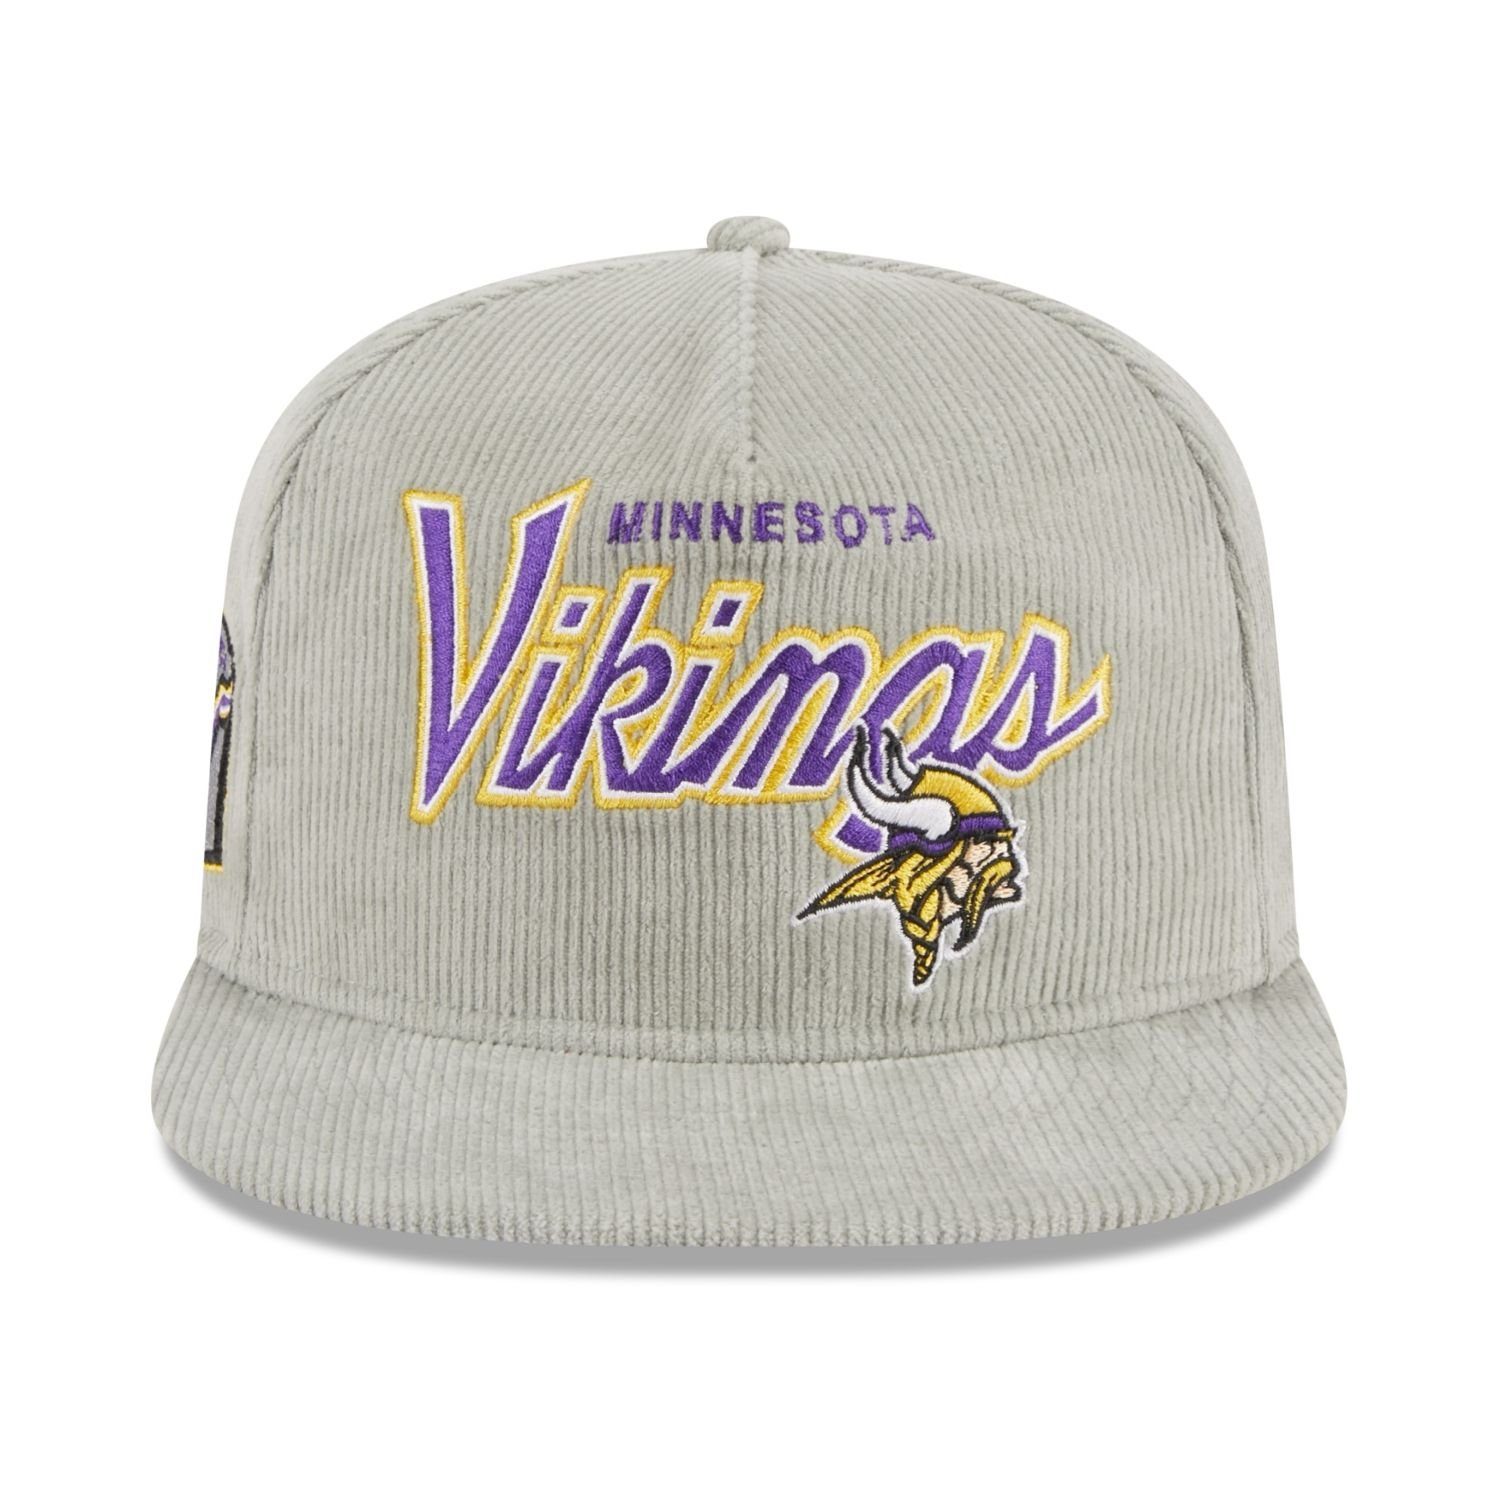 New Vikings Snapback Golfer Cap Era KORD Minnesota